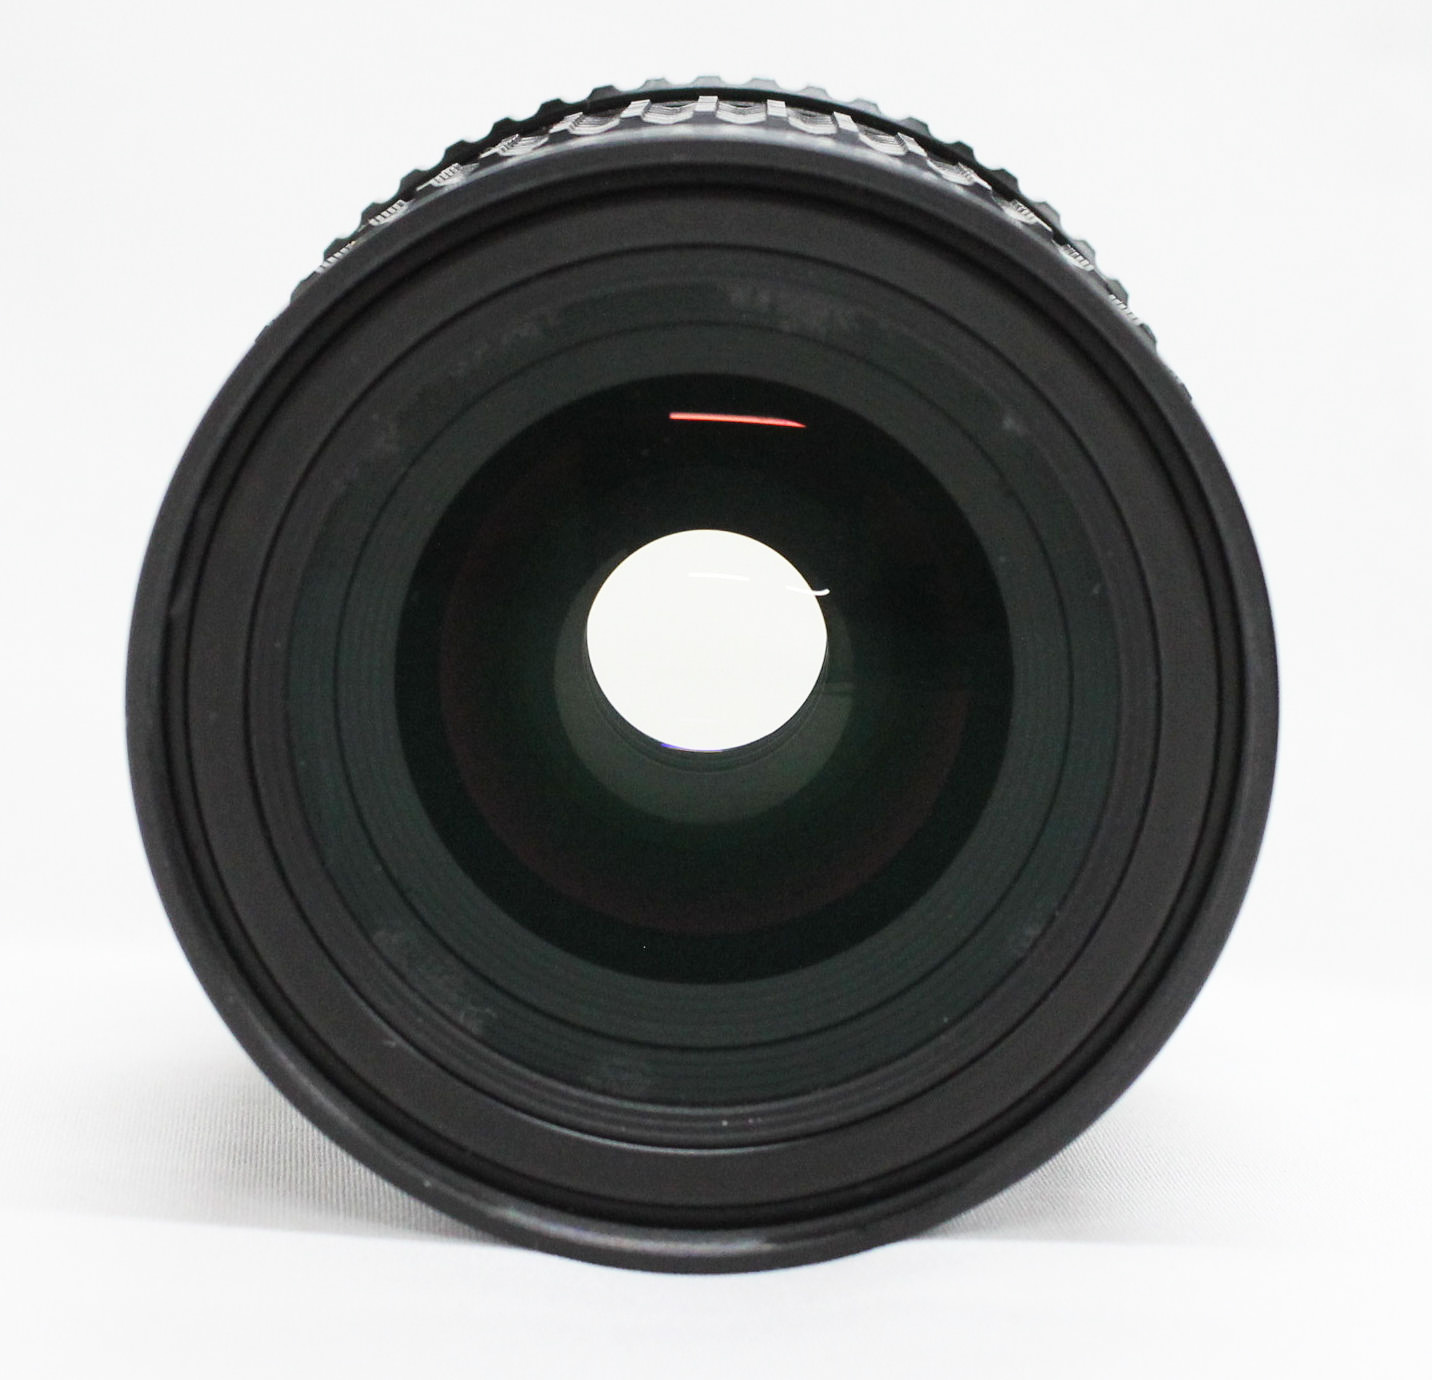  Pentax SMC Pentax-A 645 45mm F/2.8 MF Lens from Japan Photo 4